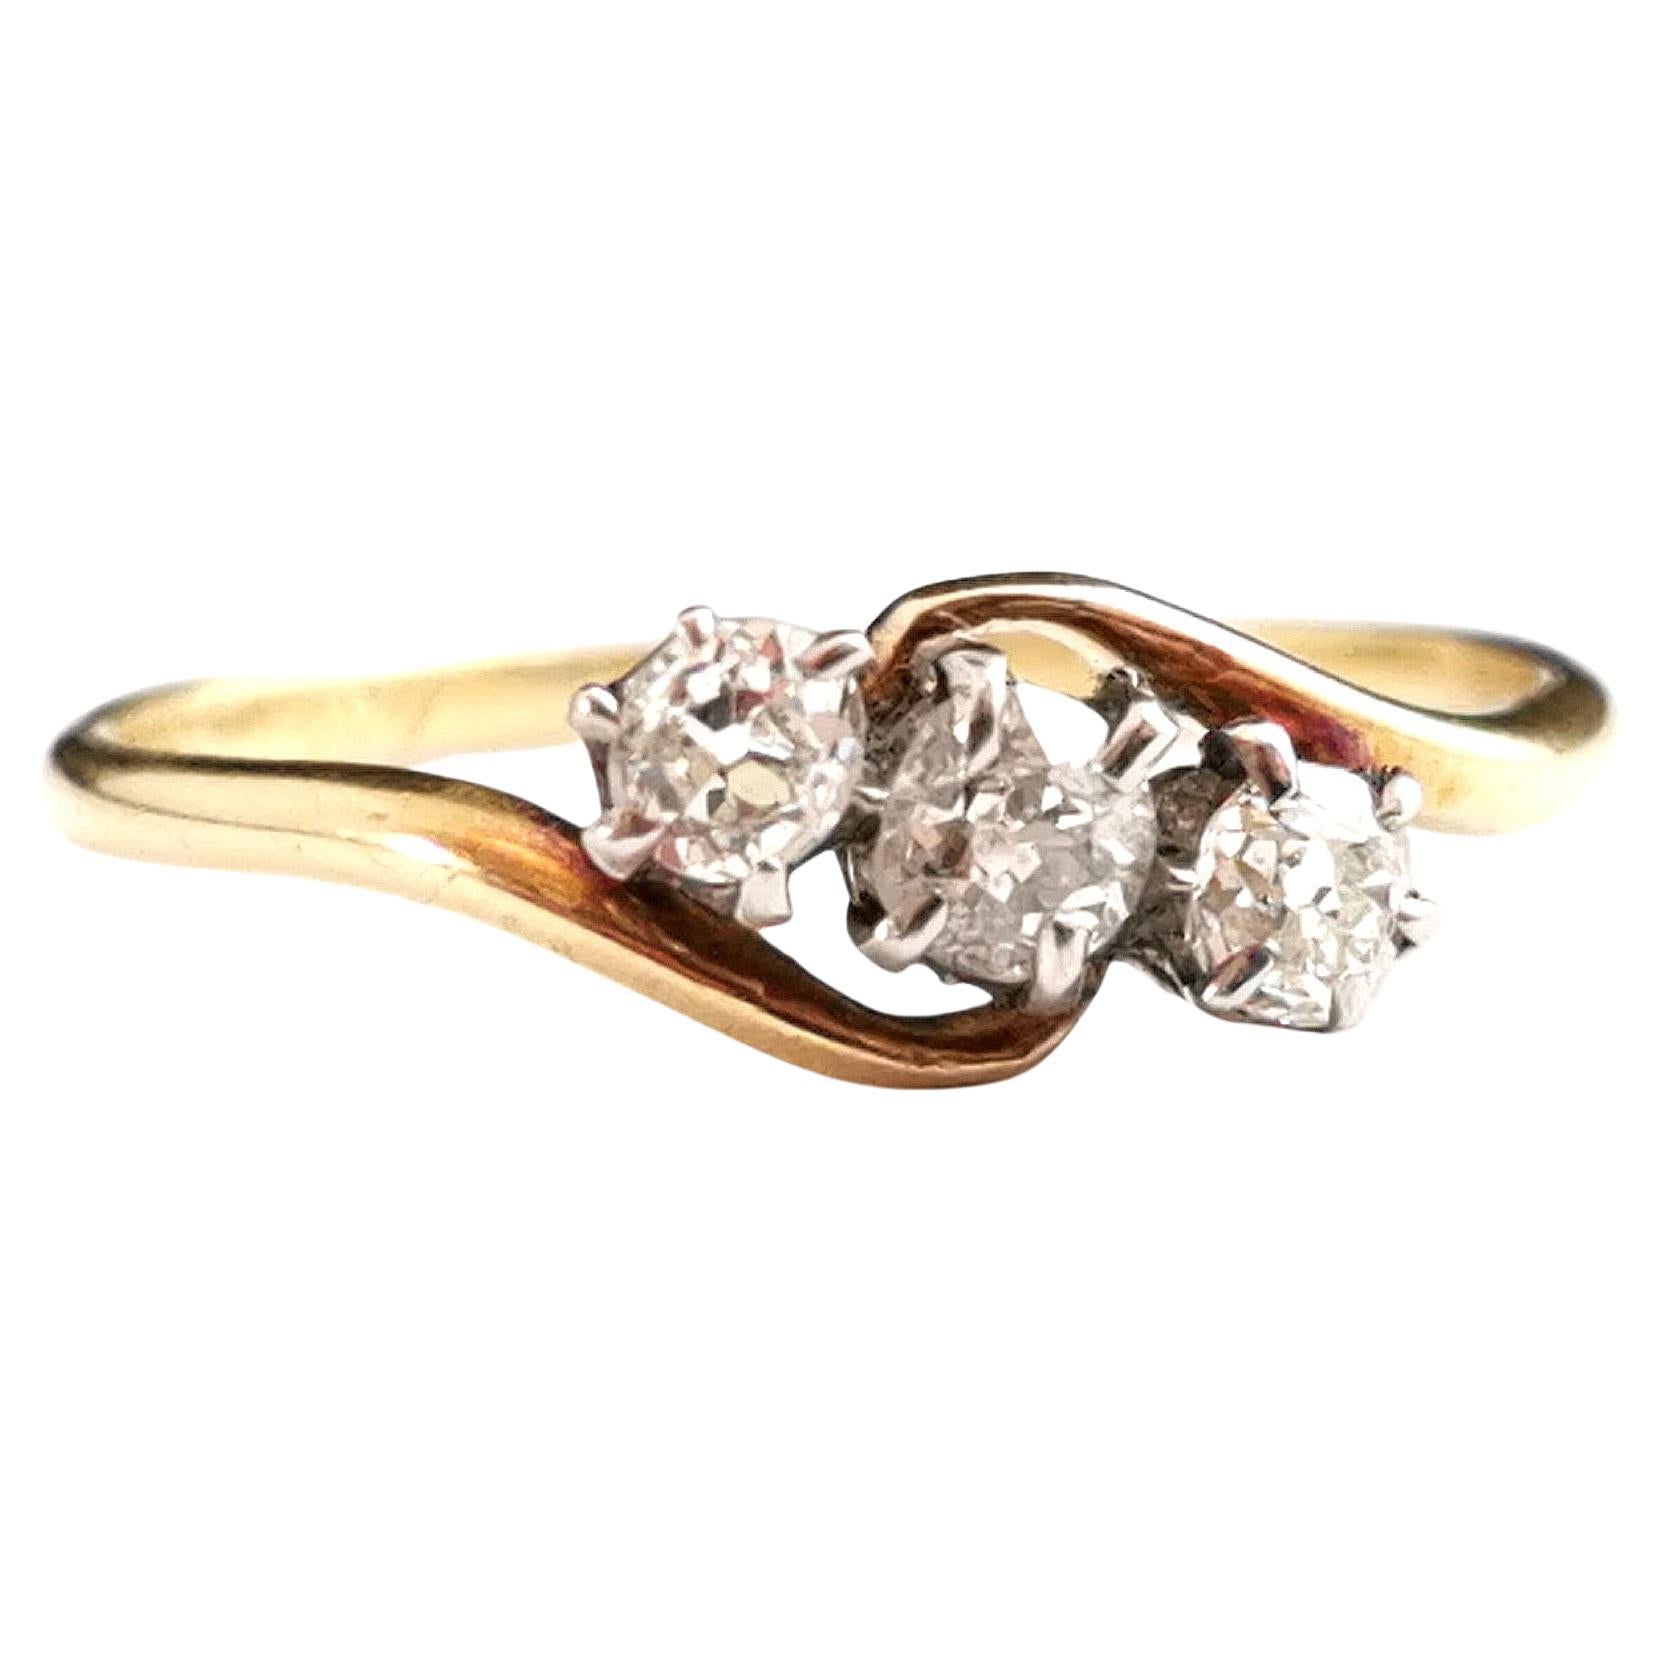 Antique Art Deco diamond trilogy ring, 18k gold and Platinum 